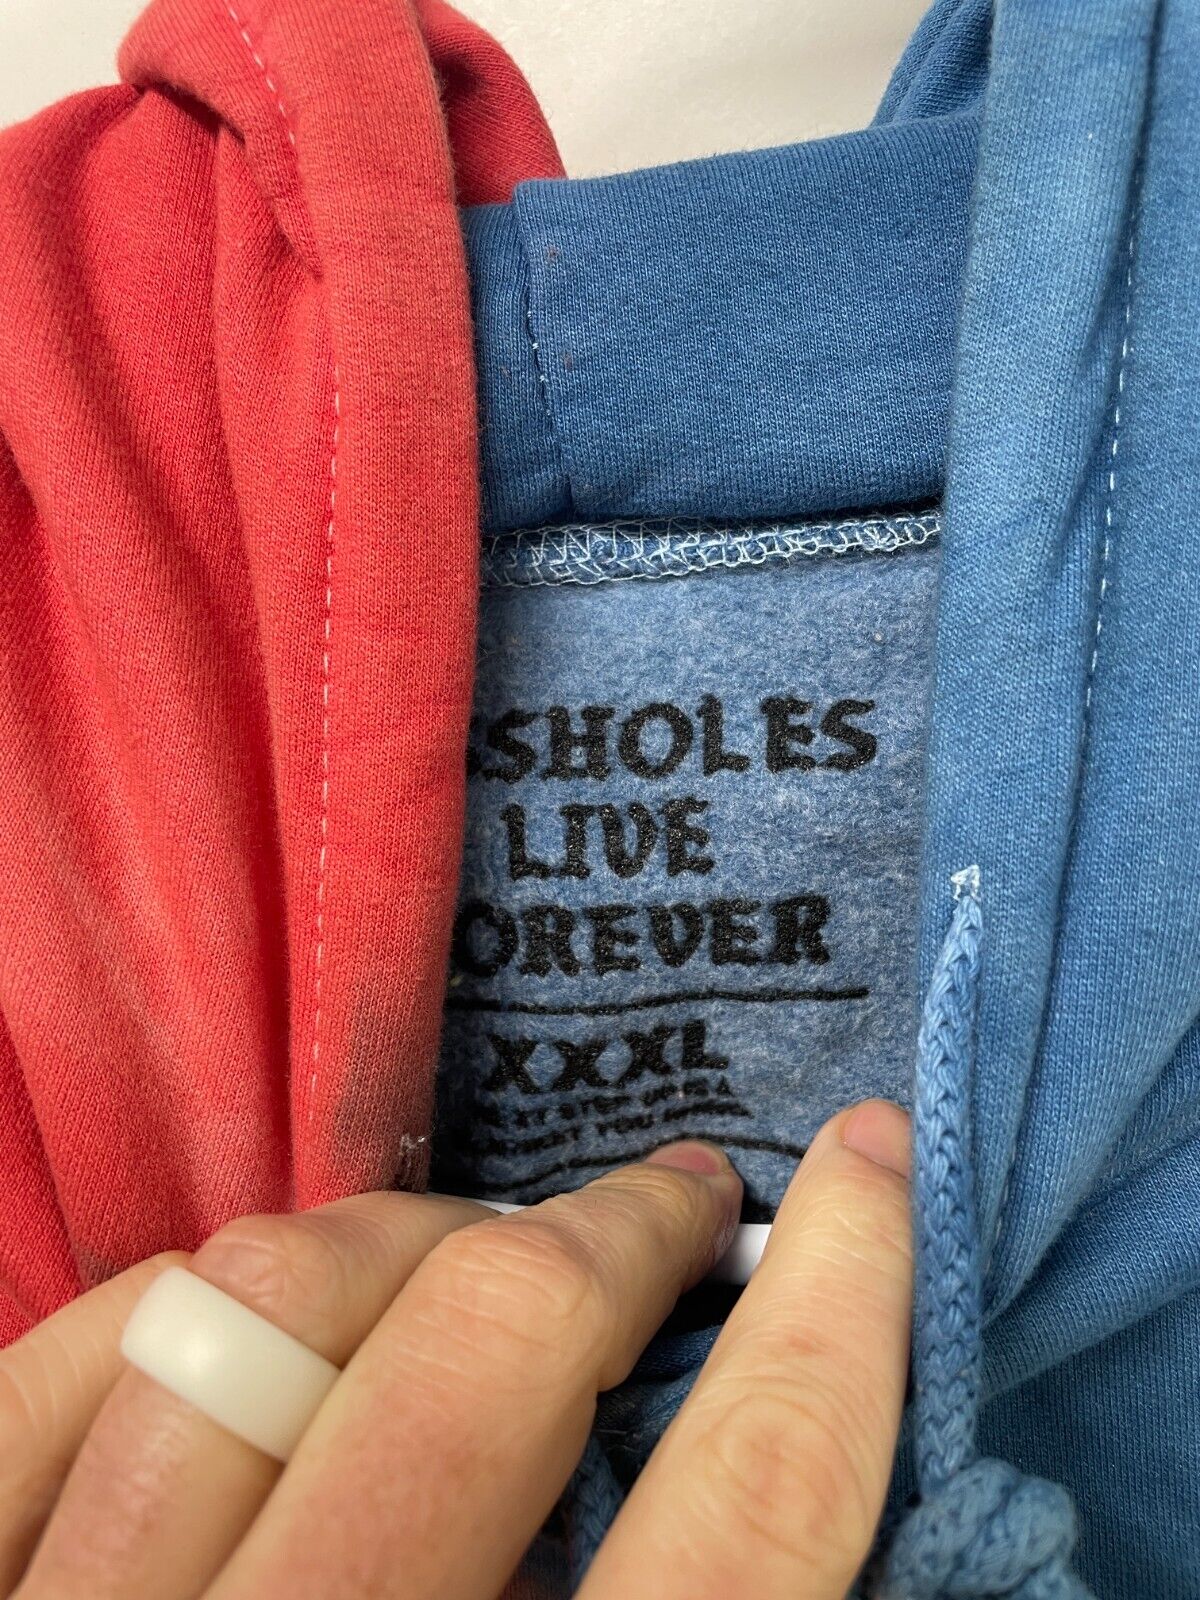 A**holes Live Forever Men XXXL Hoodie Sweatshirt Multicolor Tie-Dye Pullover ALF